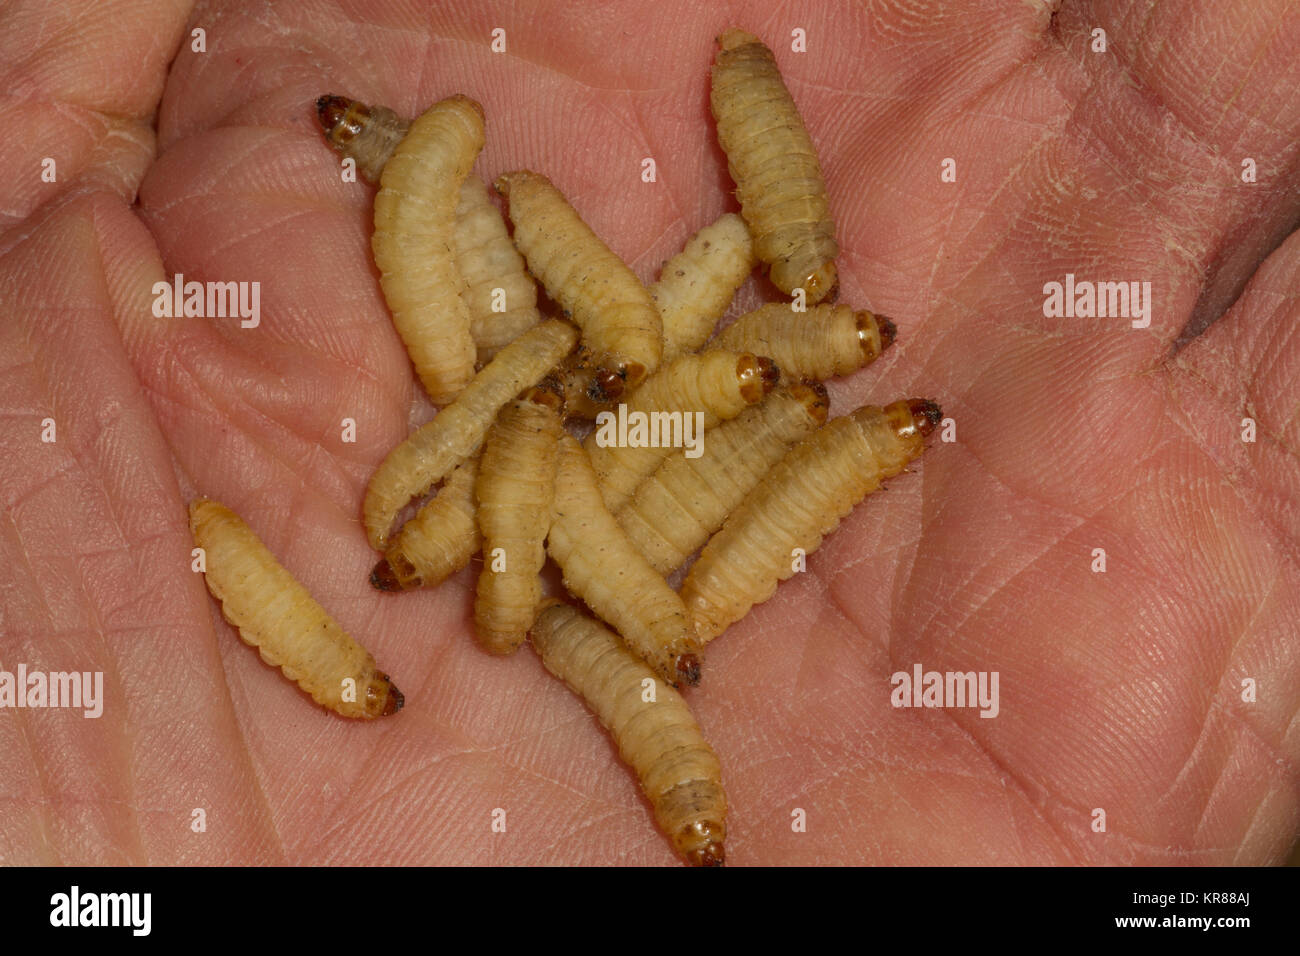 https://c8.alamy.com/comp/KR88AJ/waxworms-on-hand-KR88AJ.jpg